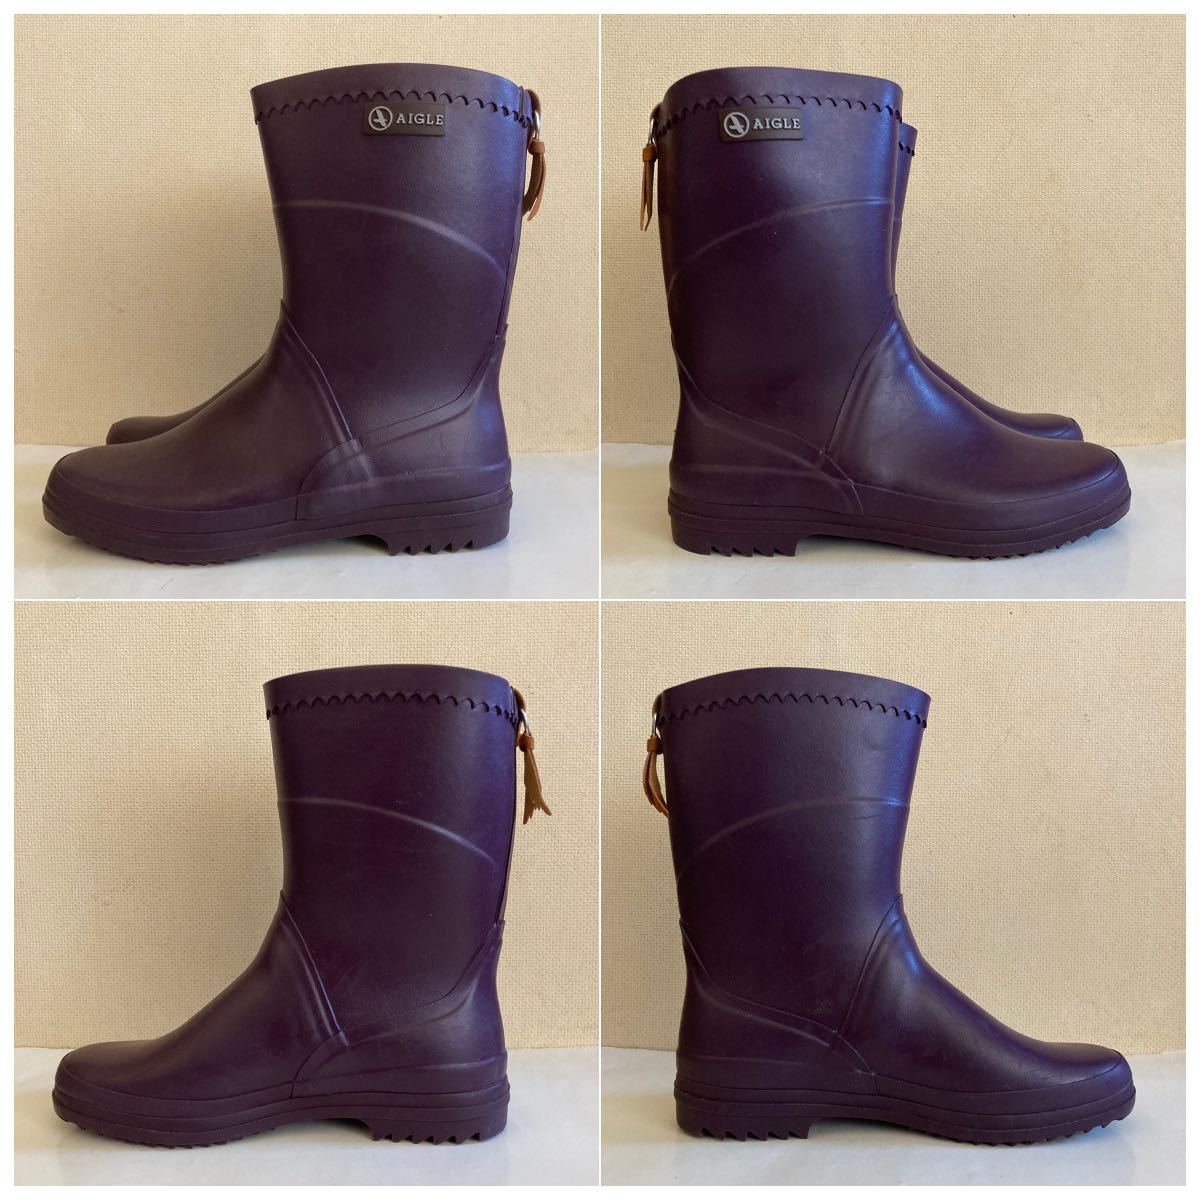 AIGLE Aigle rain boots Raver boots boots purple 40